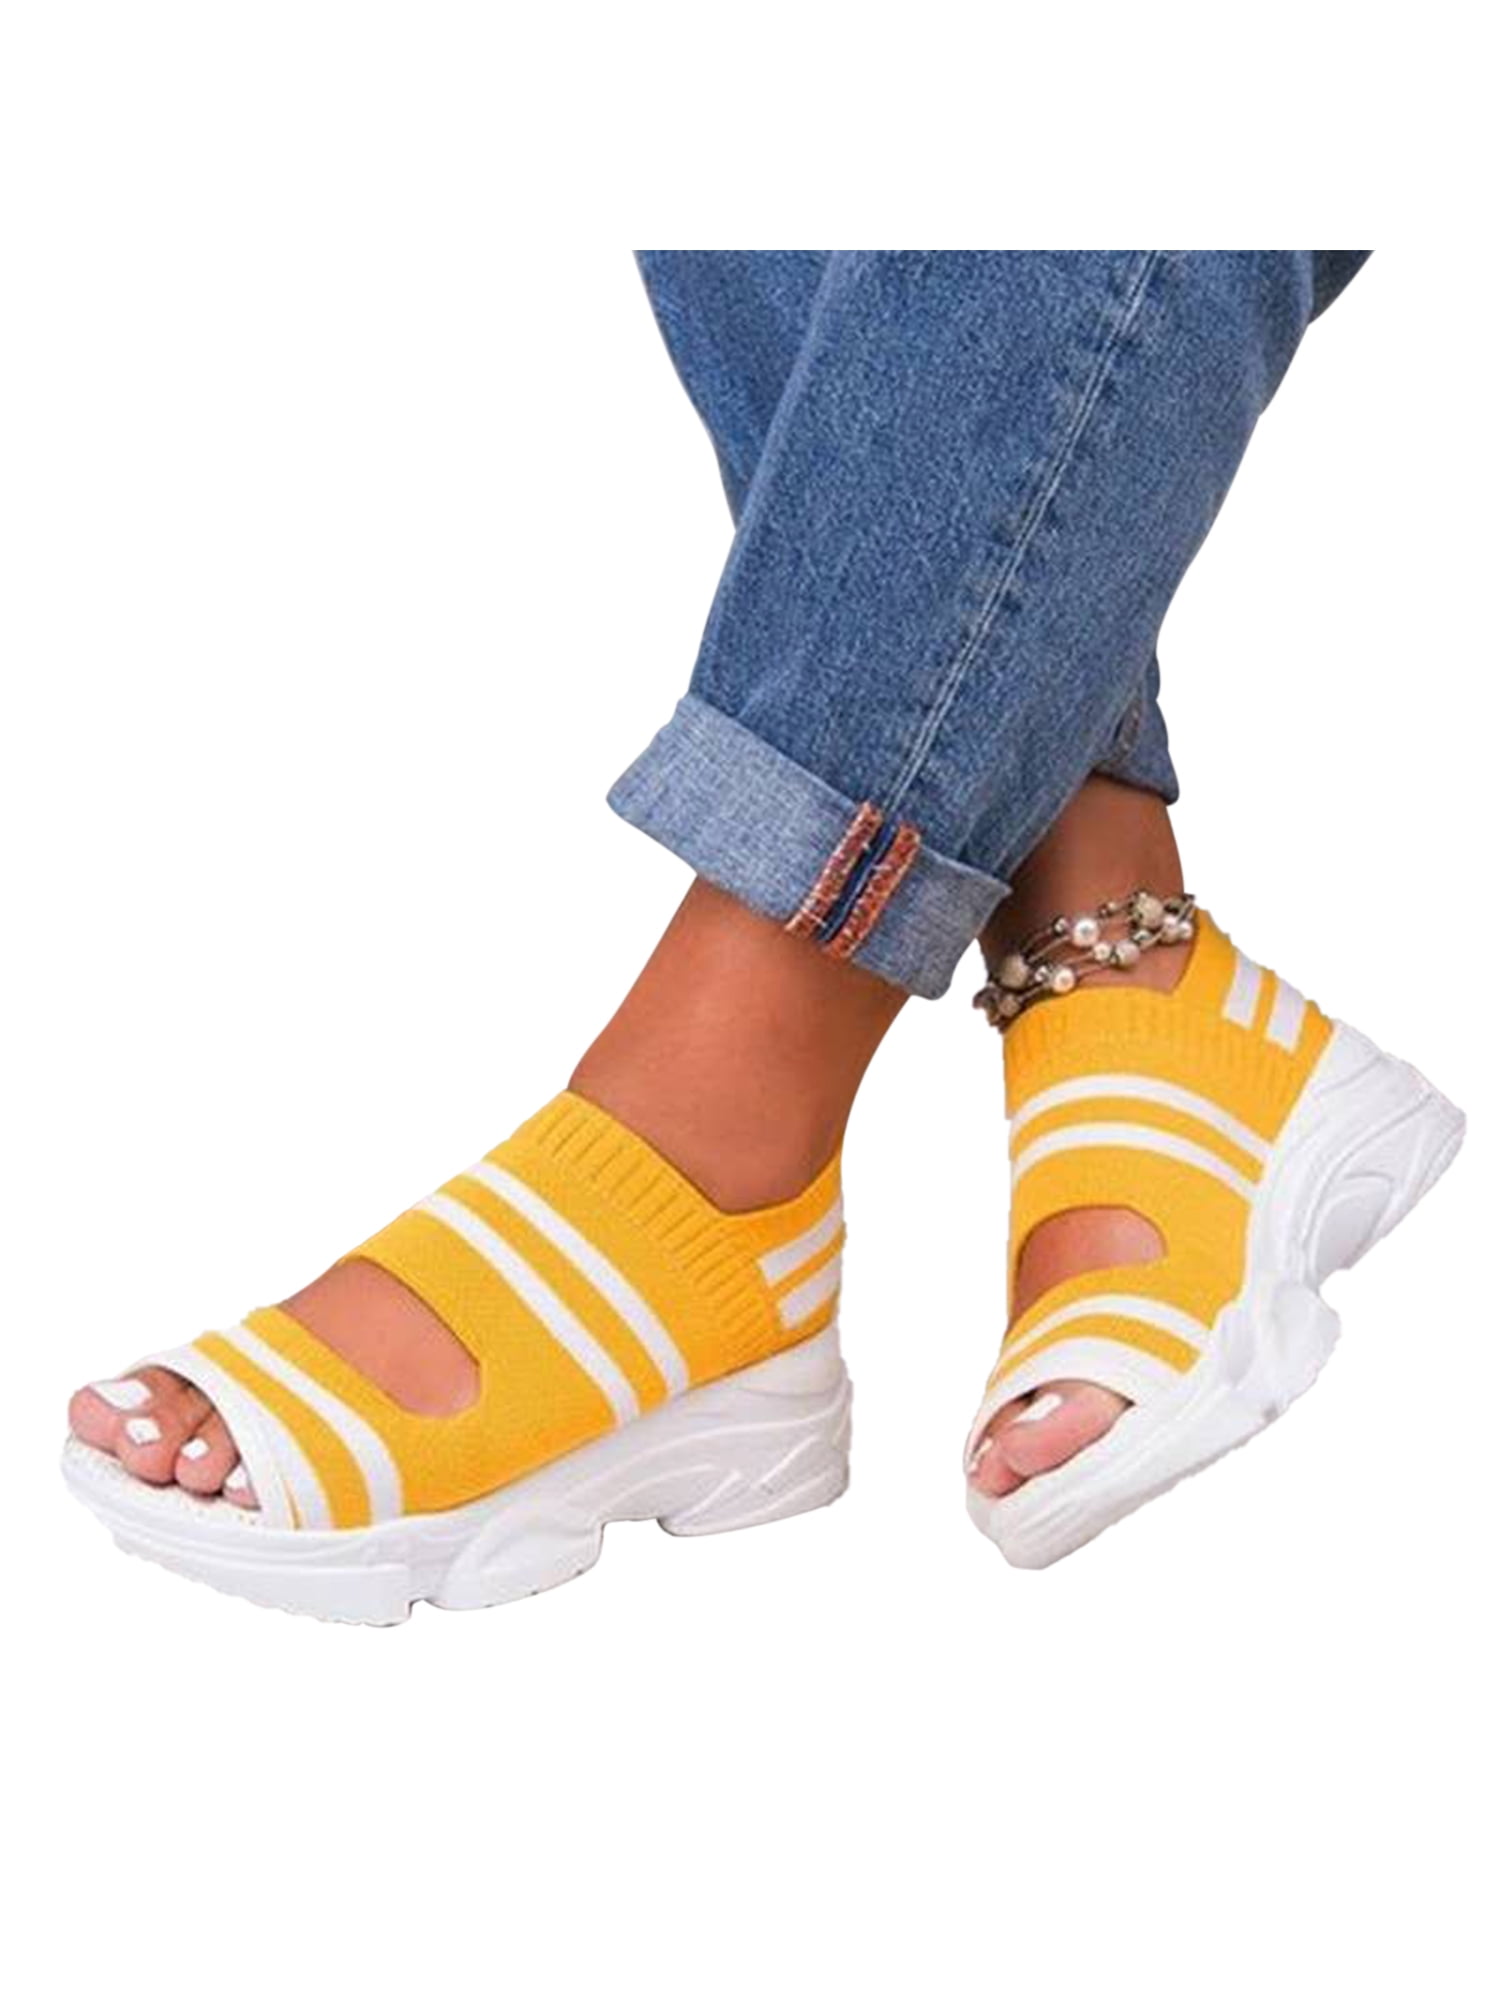 SAGUARO Mens Hiking Sandals Summer Sport Sandals Walking Shoes Breathable Mesh Outdoor Sandals Unisex 